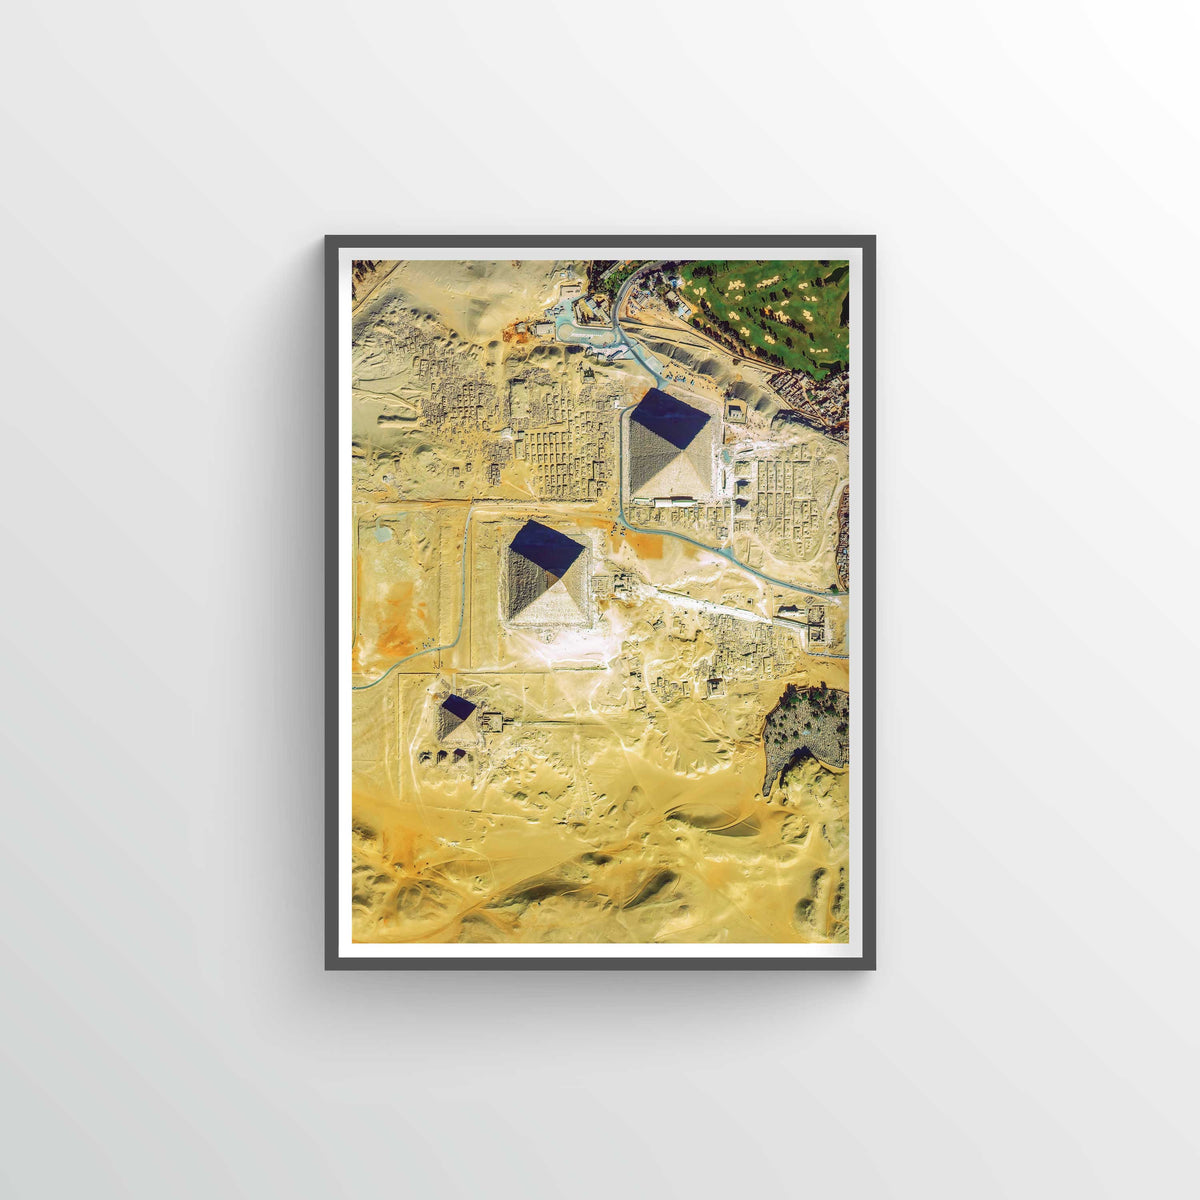 Giza Pyramids Earth Photography - Art Print